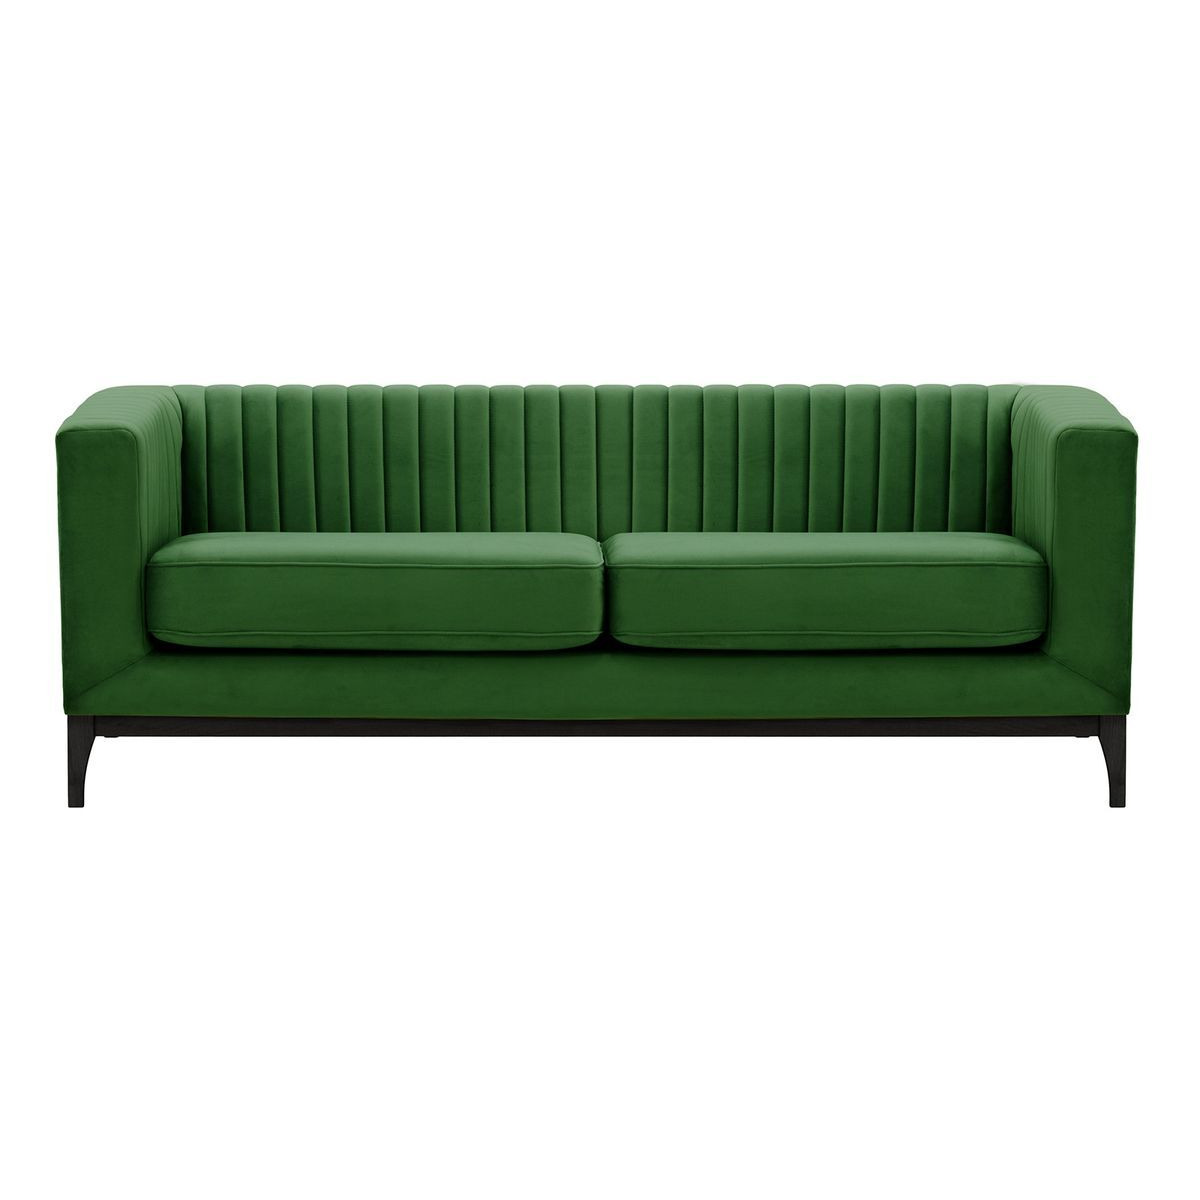 Slender Wood 3 Seater Sofa, dark green, Leg colour: black - image 1